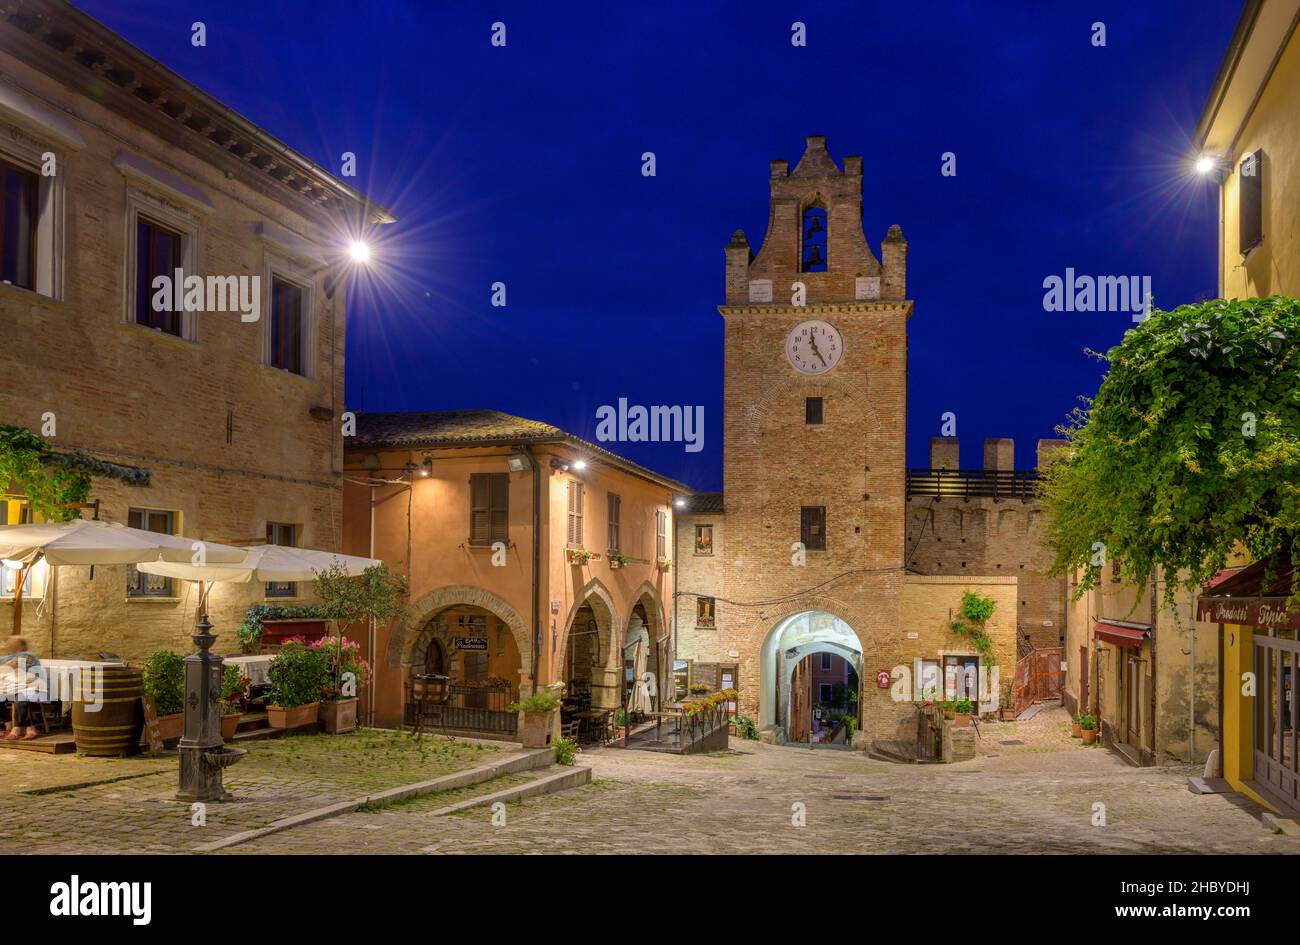 Tour de l'horloge et restaurant, Gradara, province de Pesaro et Urbino, Italie Banque D'Images